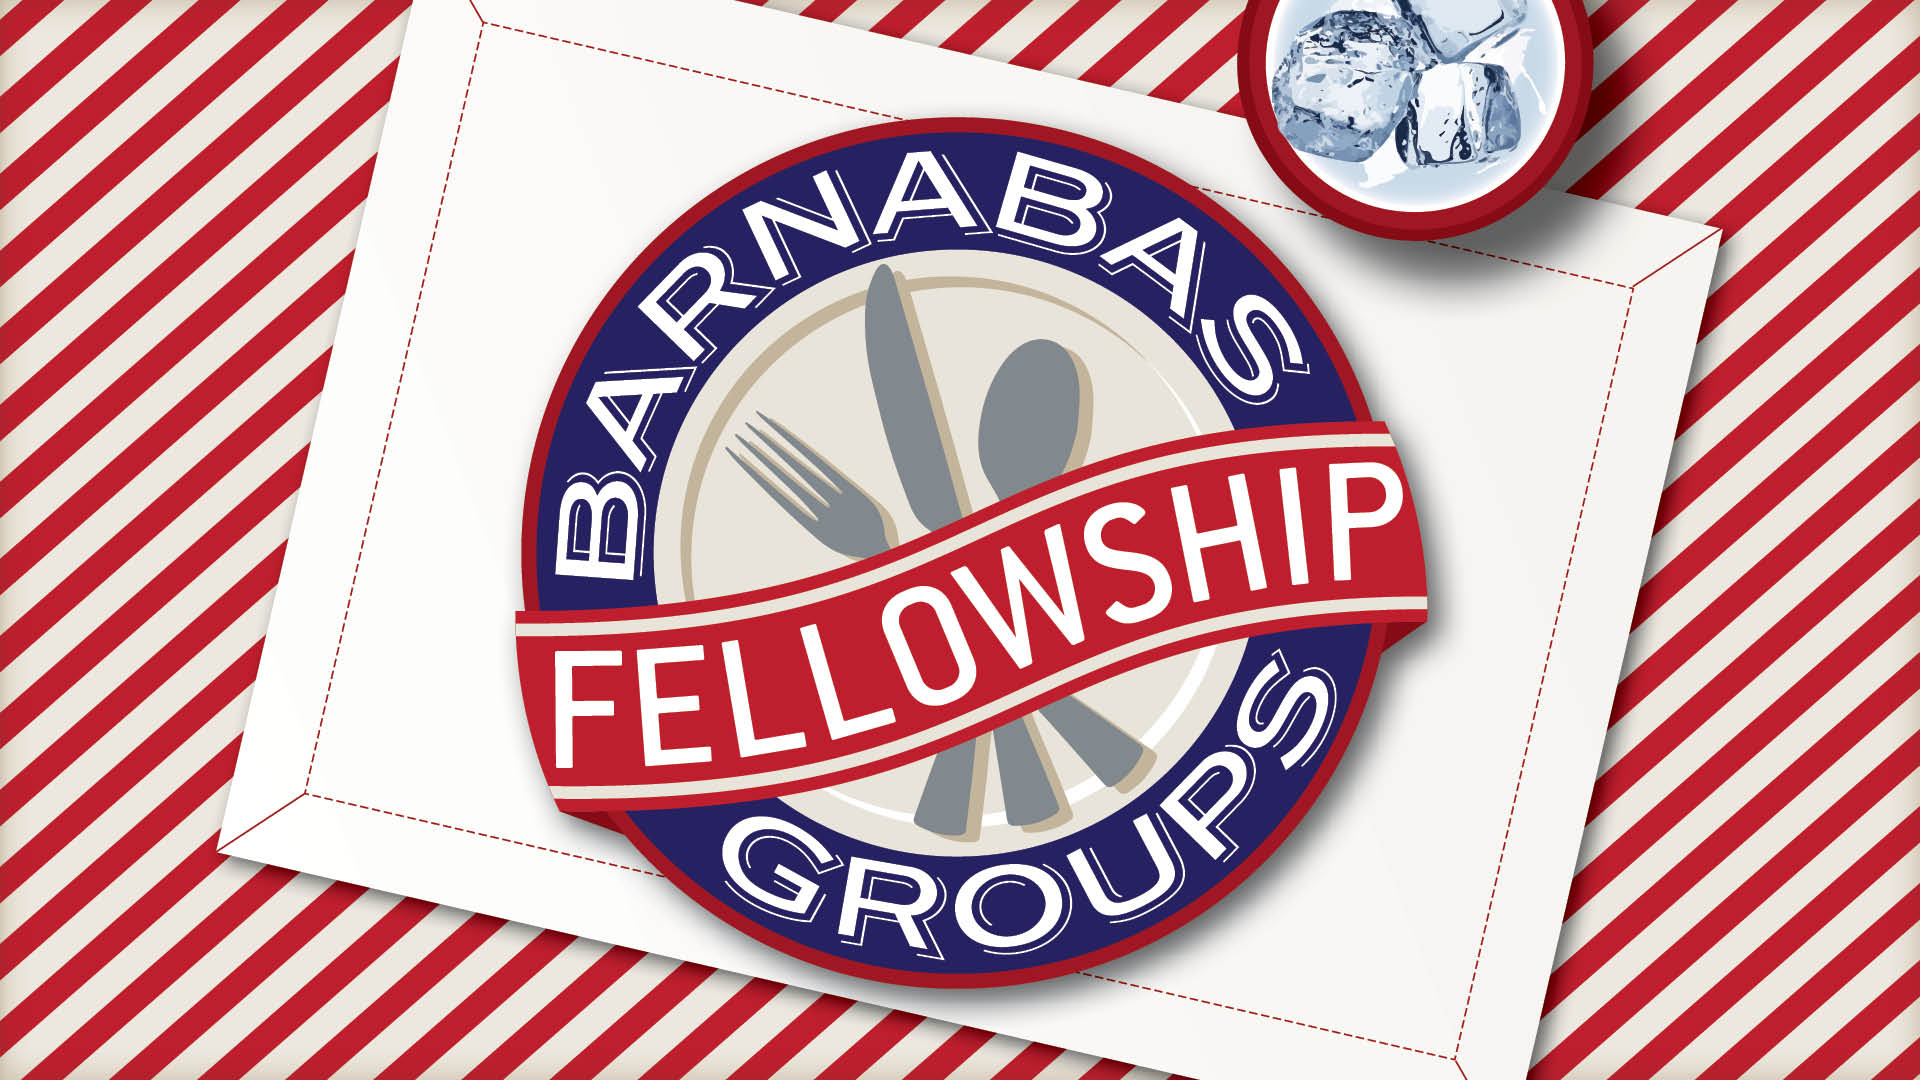 Barnabas Groups